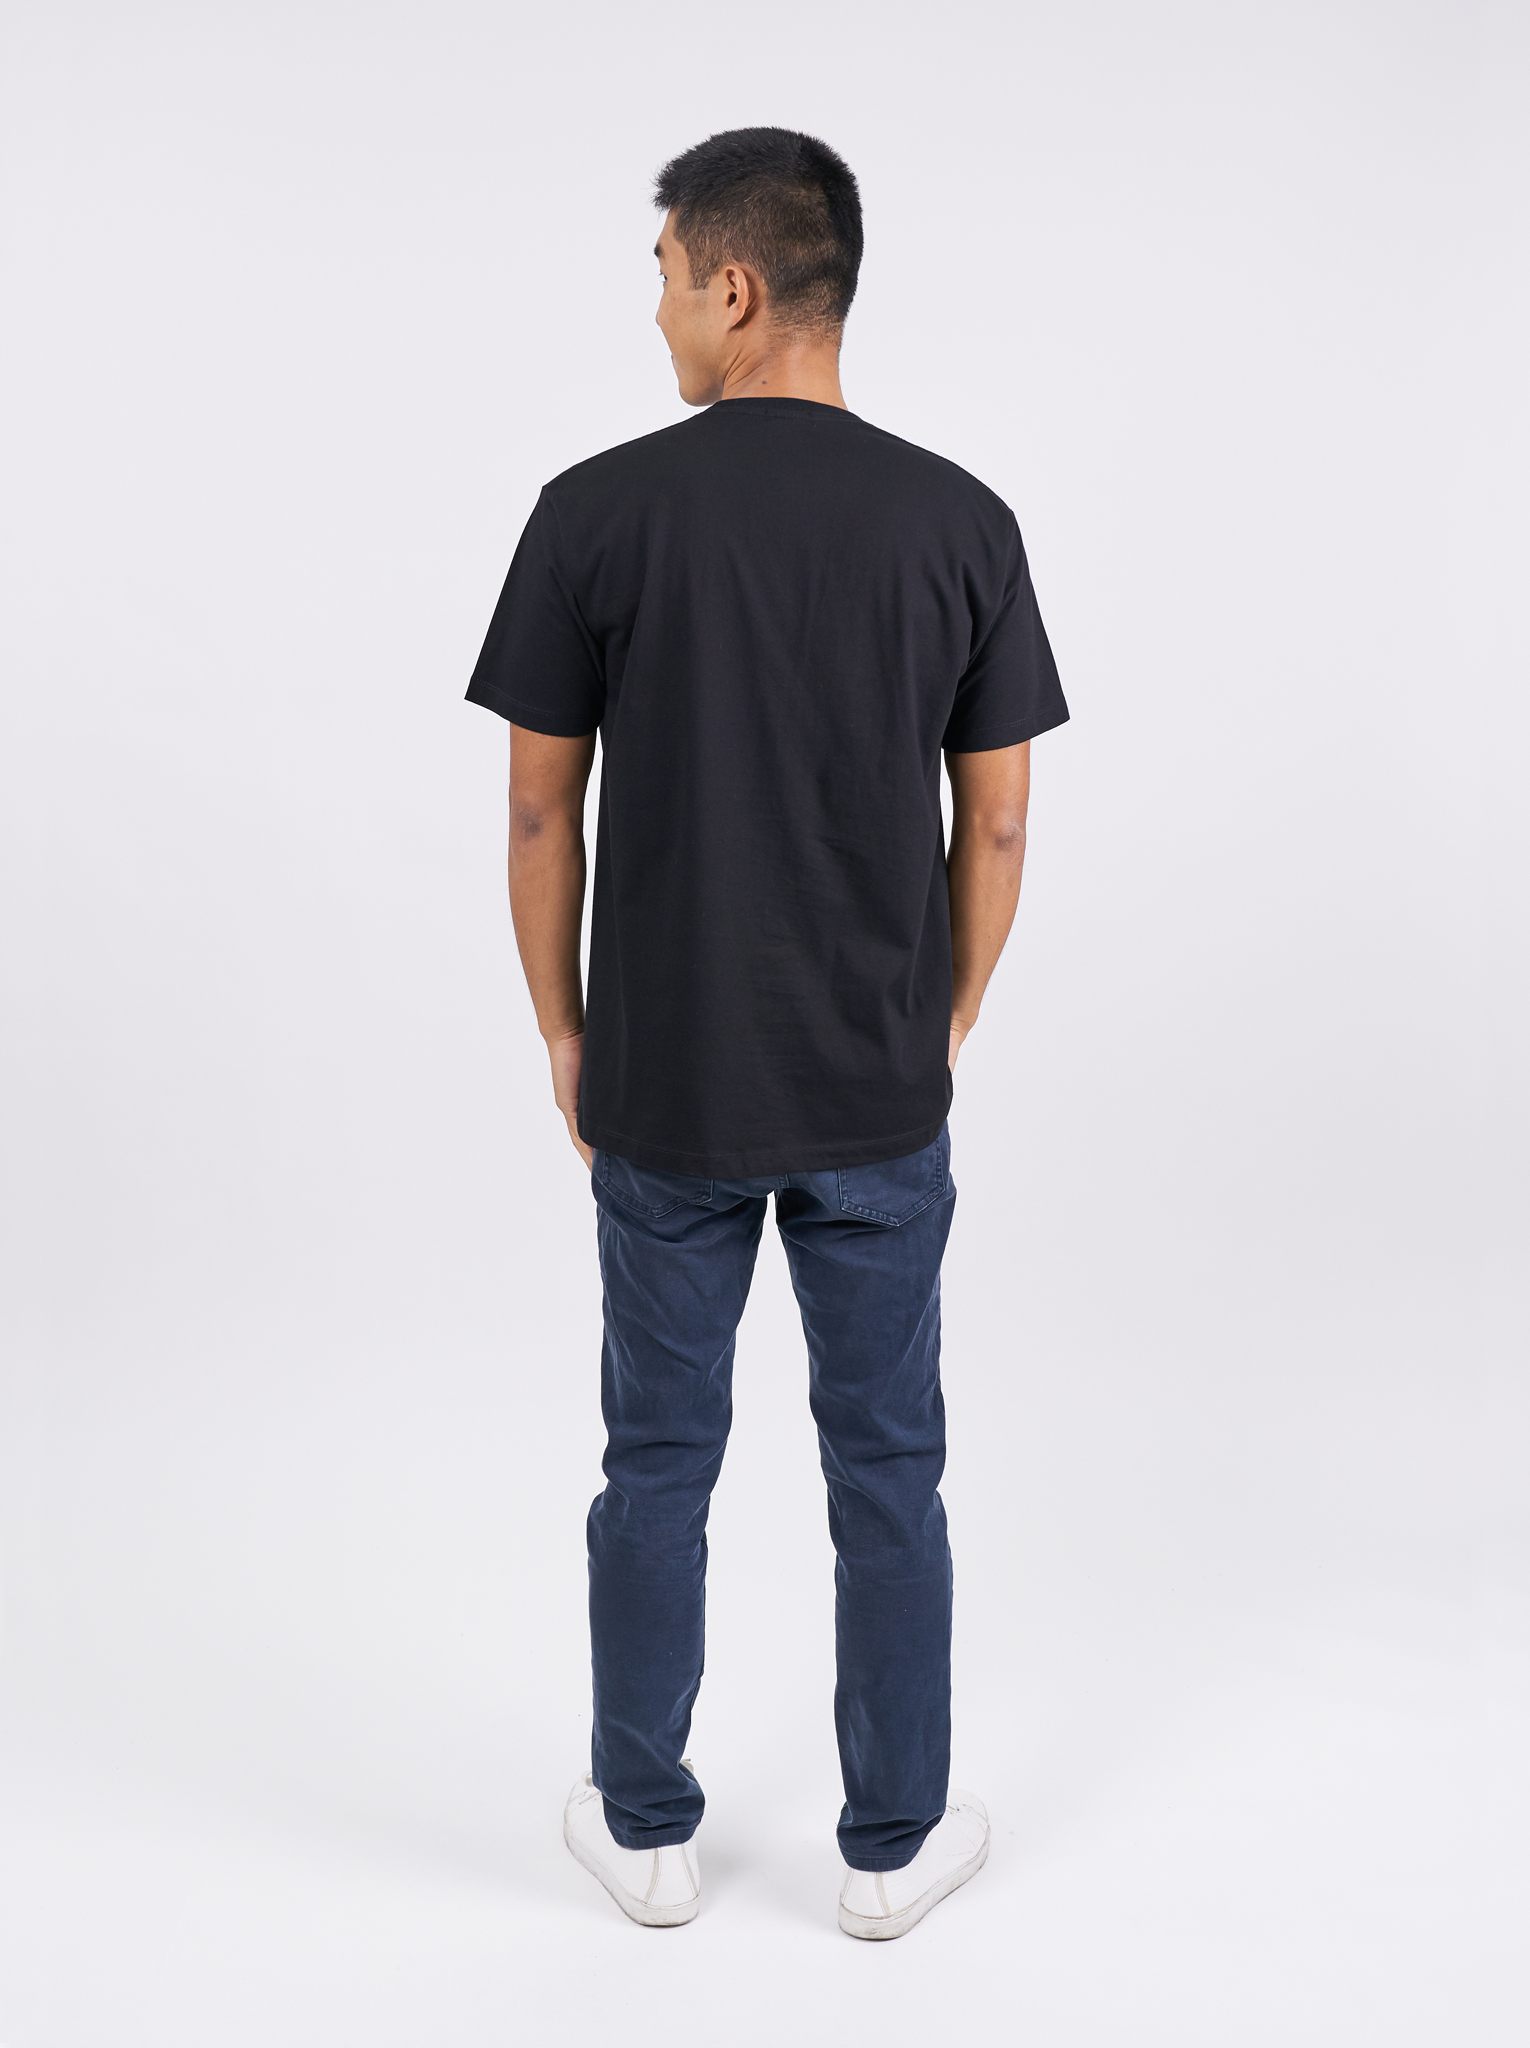 T-Shirt เสื้อยืด (Black, สีดำ)(Unisex)